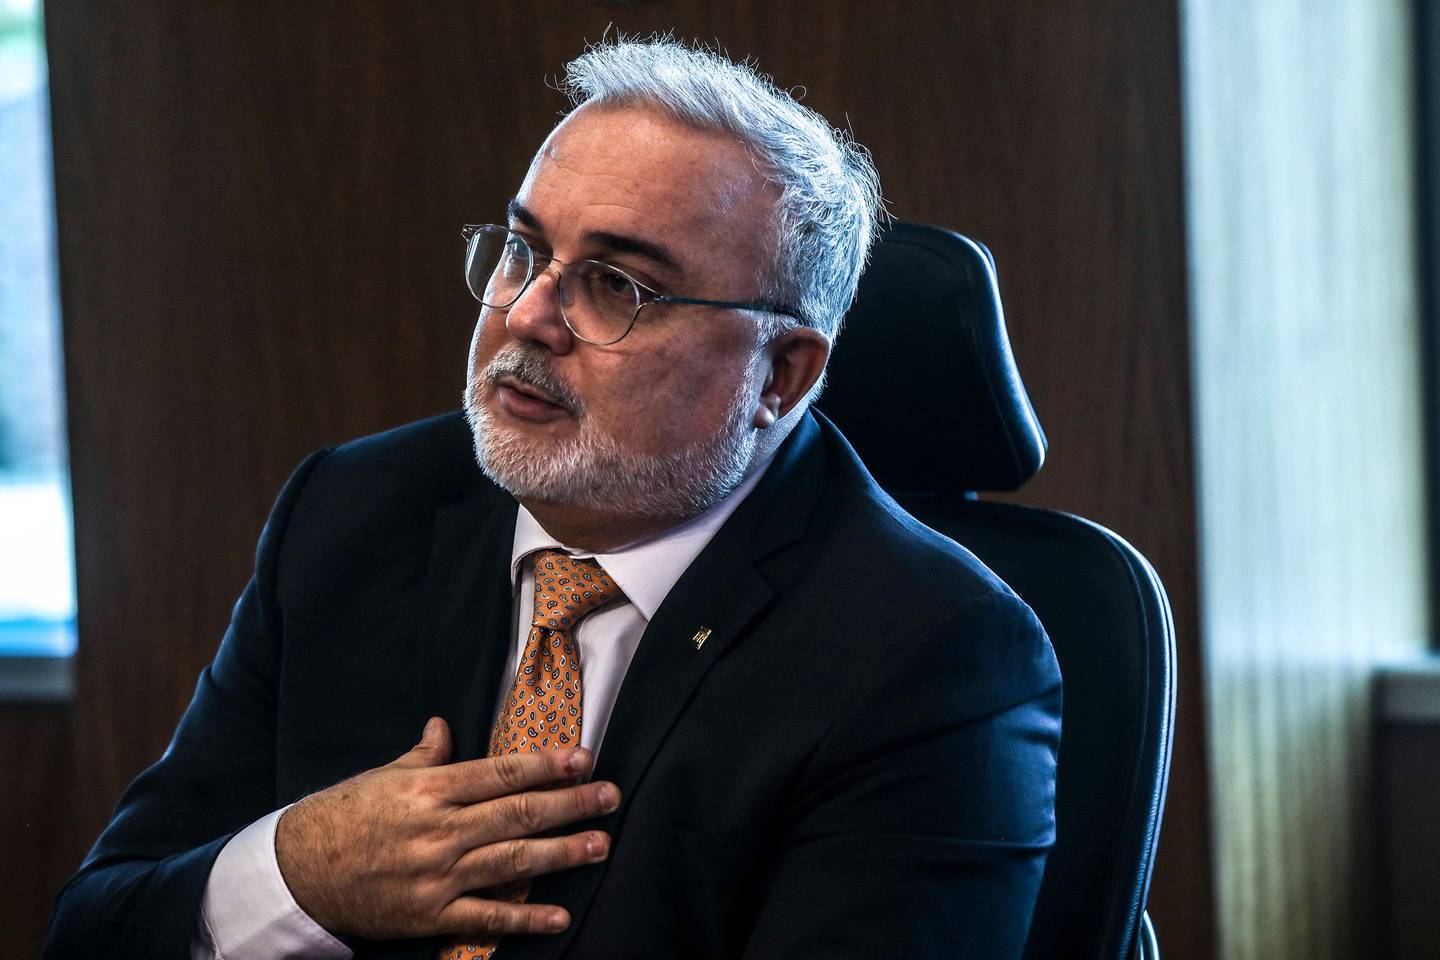 Jean Paul Prates, chief executive officer of Petroleo Brasileiro SA (Petrobras), speaks during an interview at the company headquarters in Rio de Janeiro.